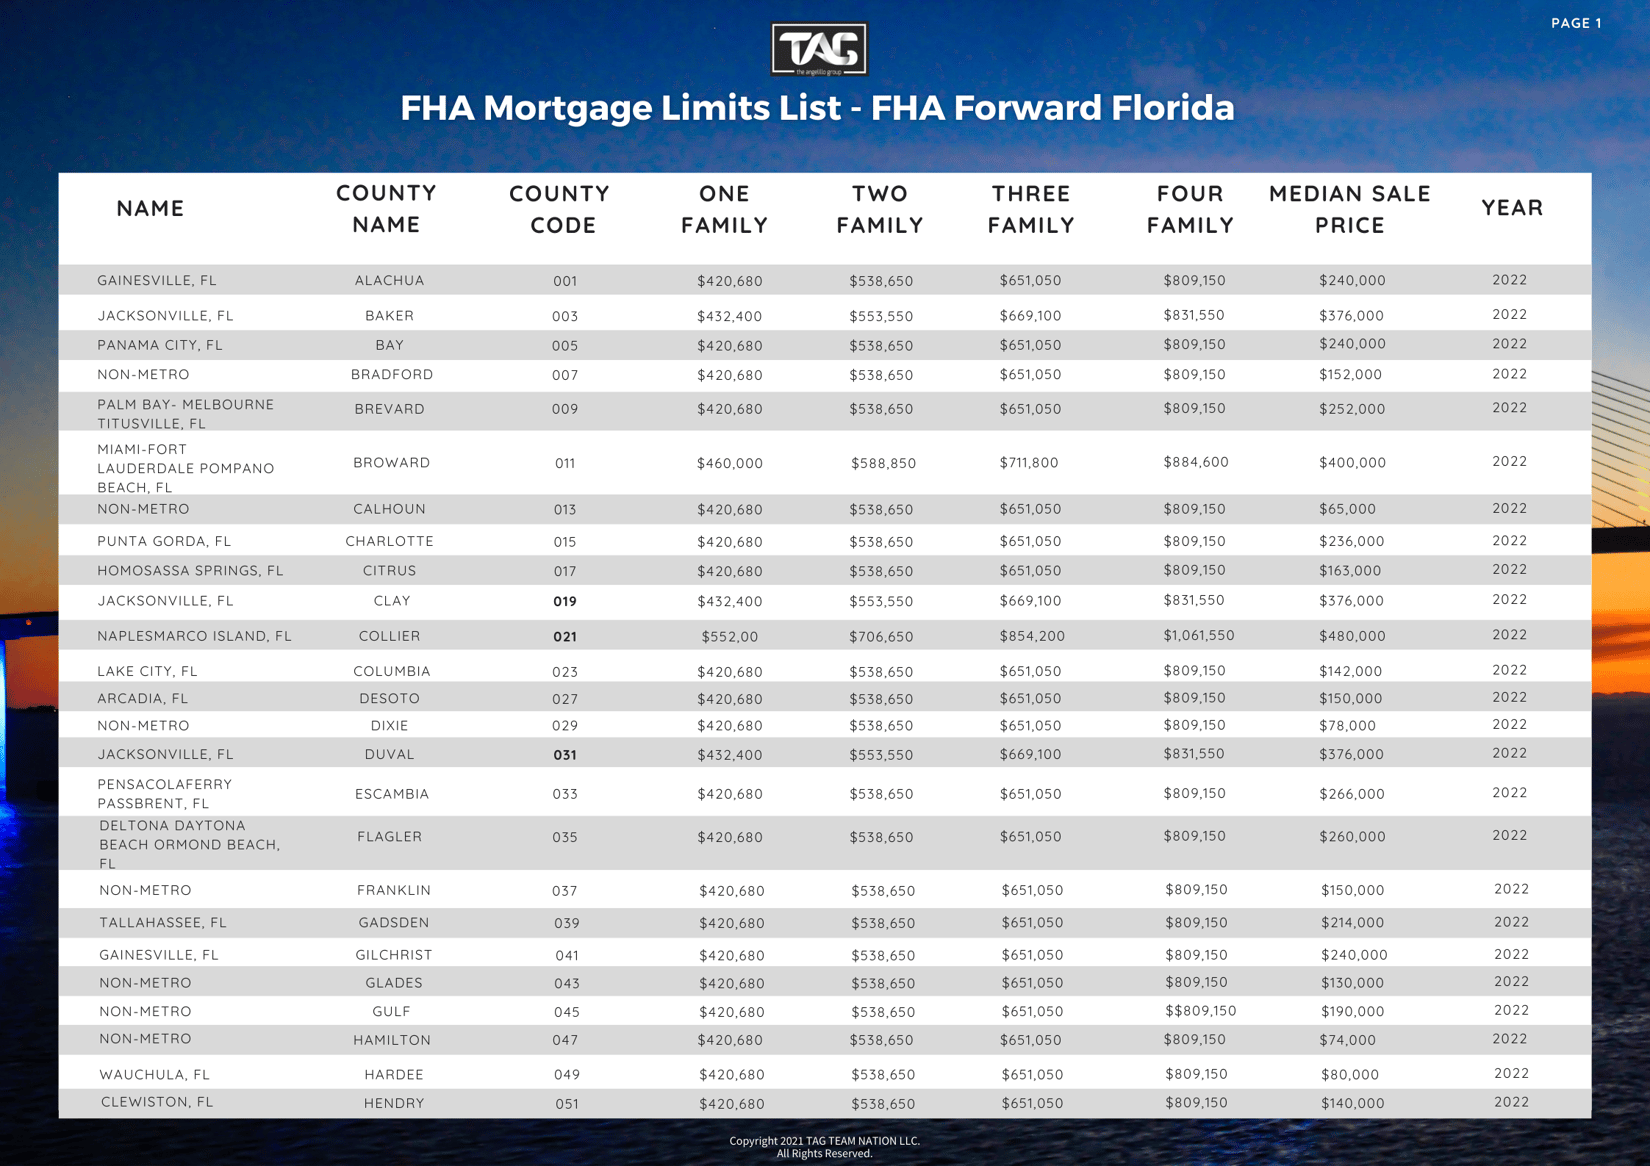 FHA Mortgage Limits List FHA Forward Florida 2022 Ebook by The TAG TEAM